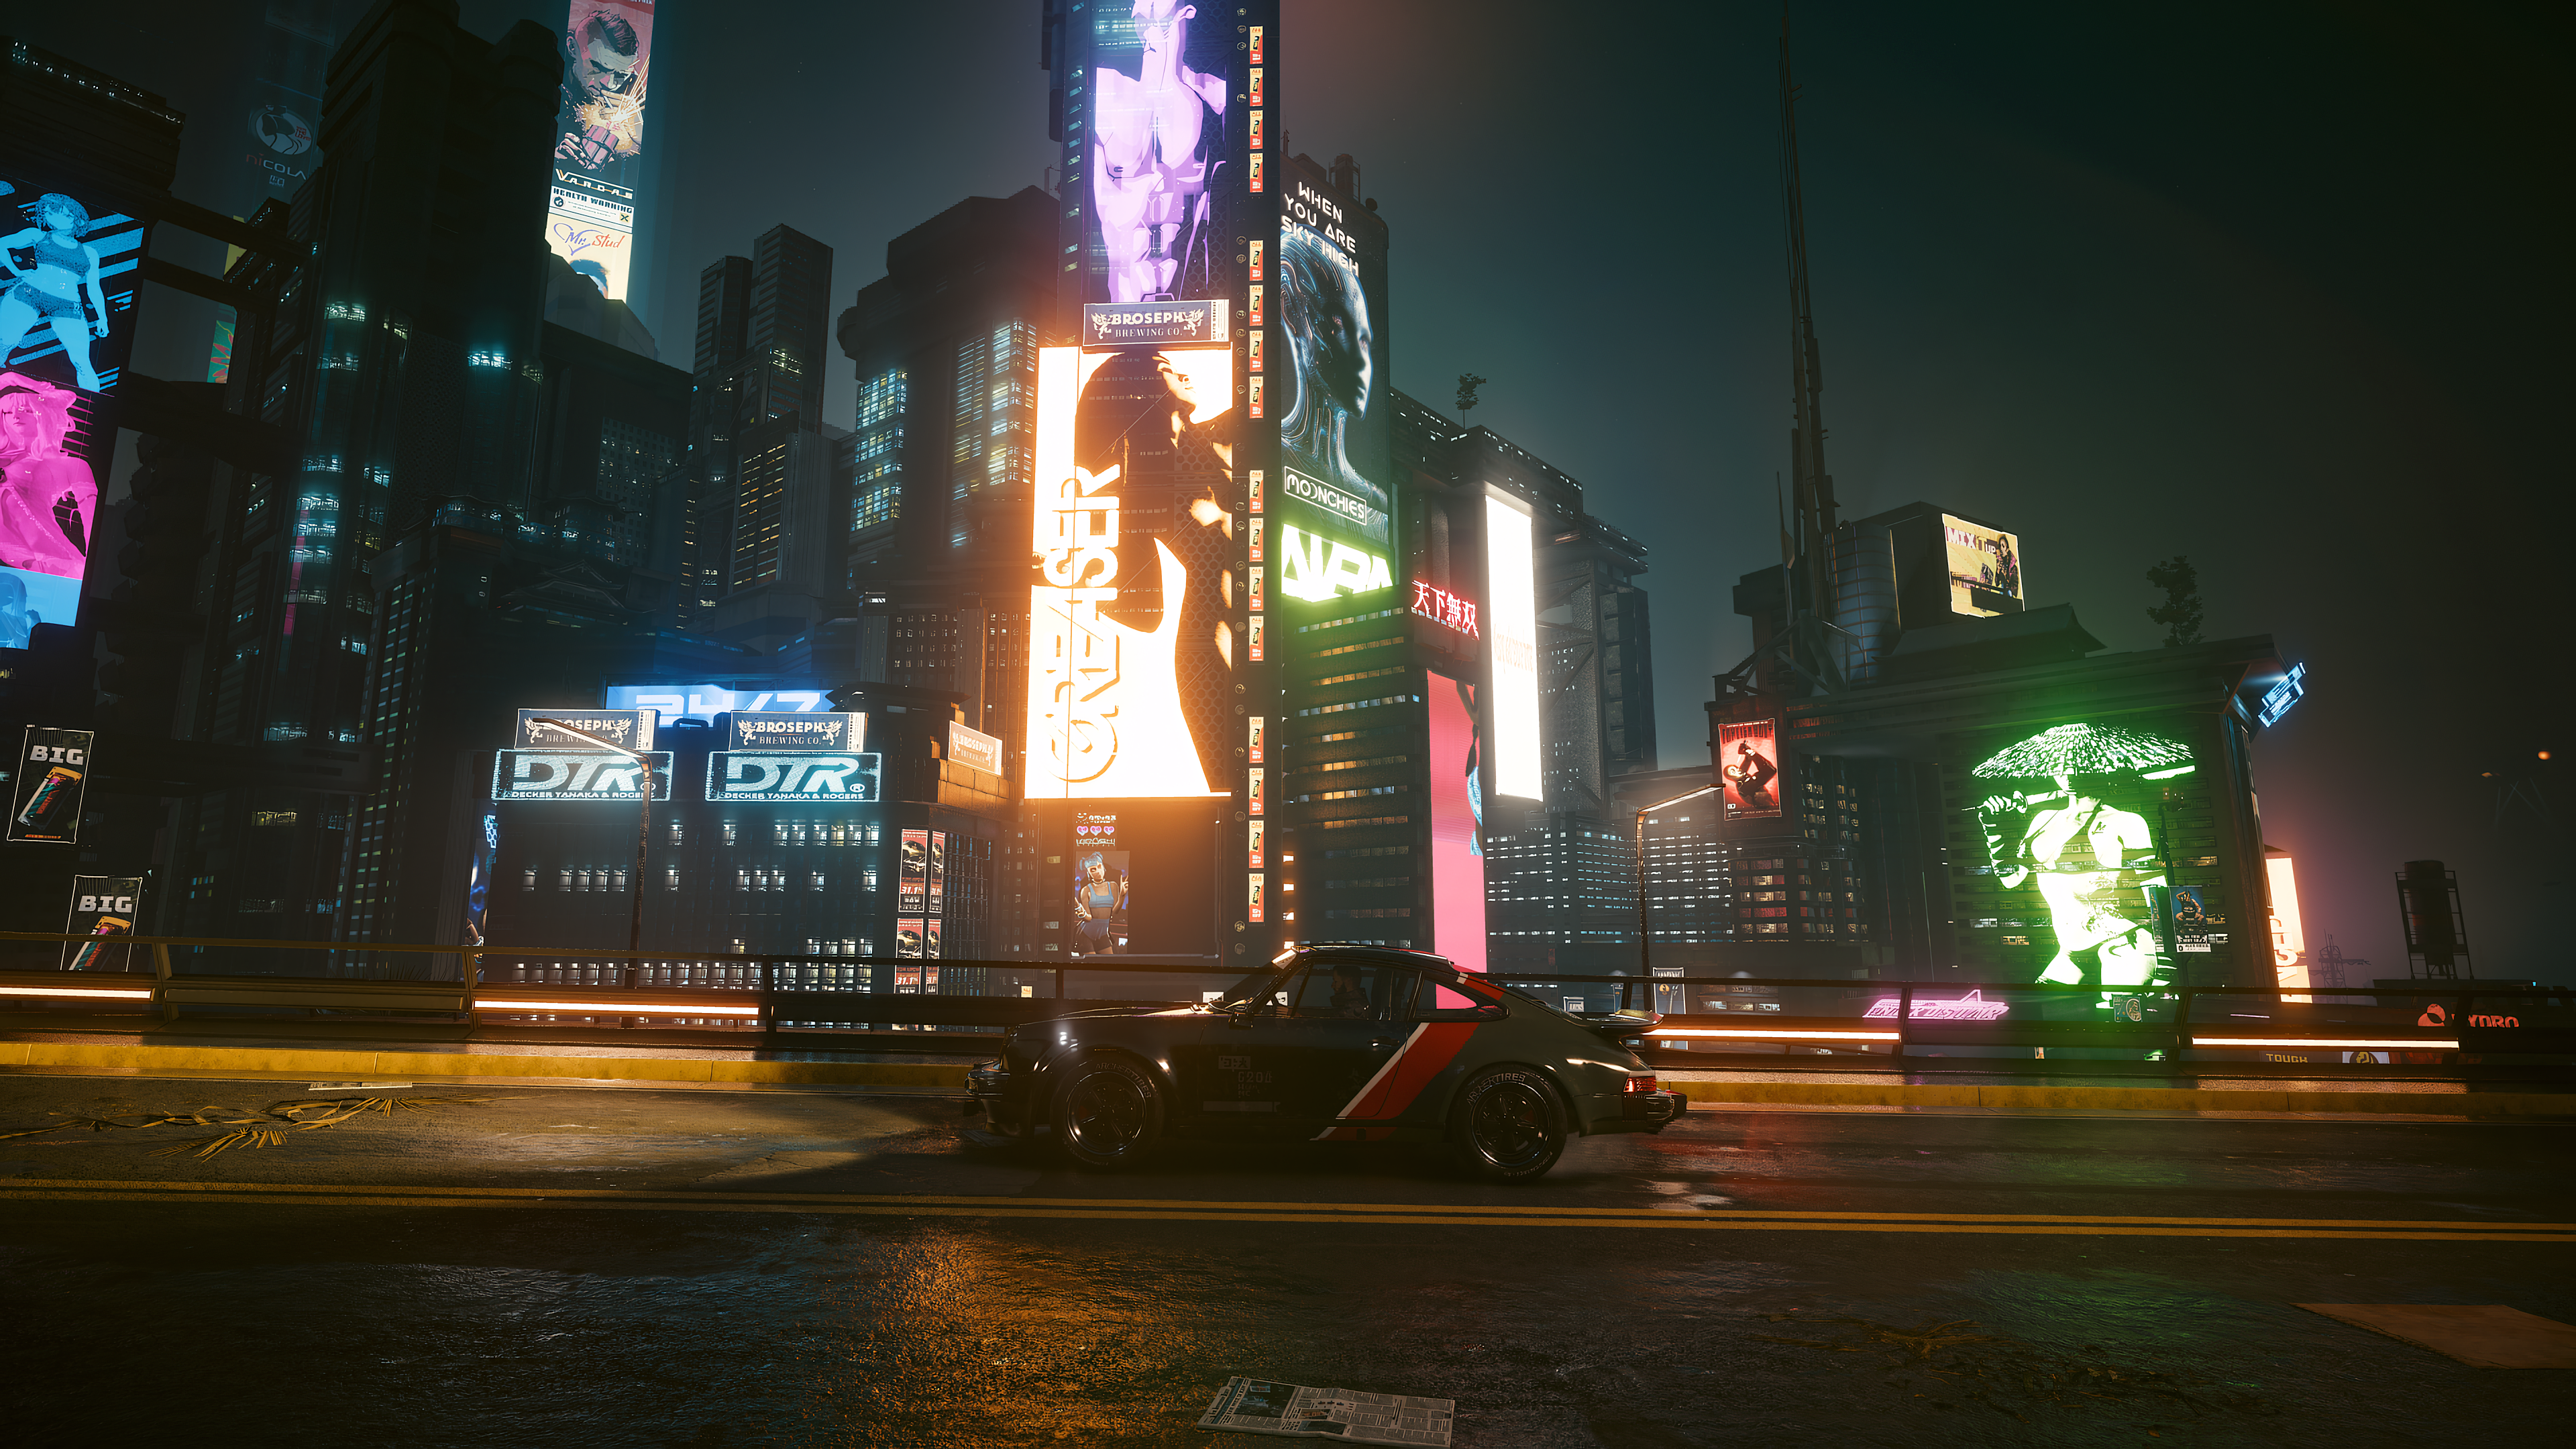 General 3840x2160 Porsche car Cyberpunk 2077 futurism neon video games video game art city road reflection dark night lamp